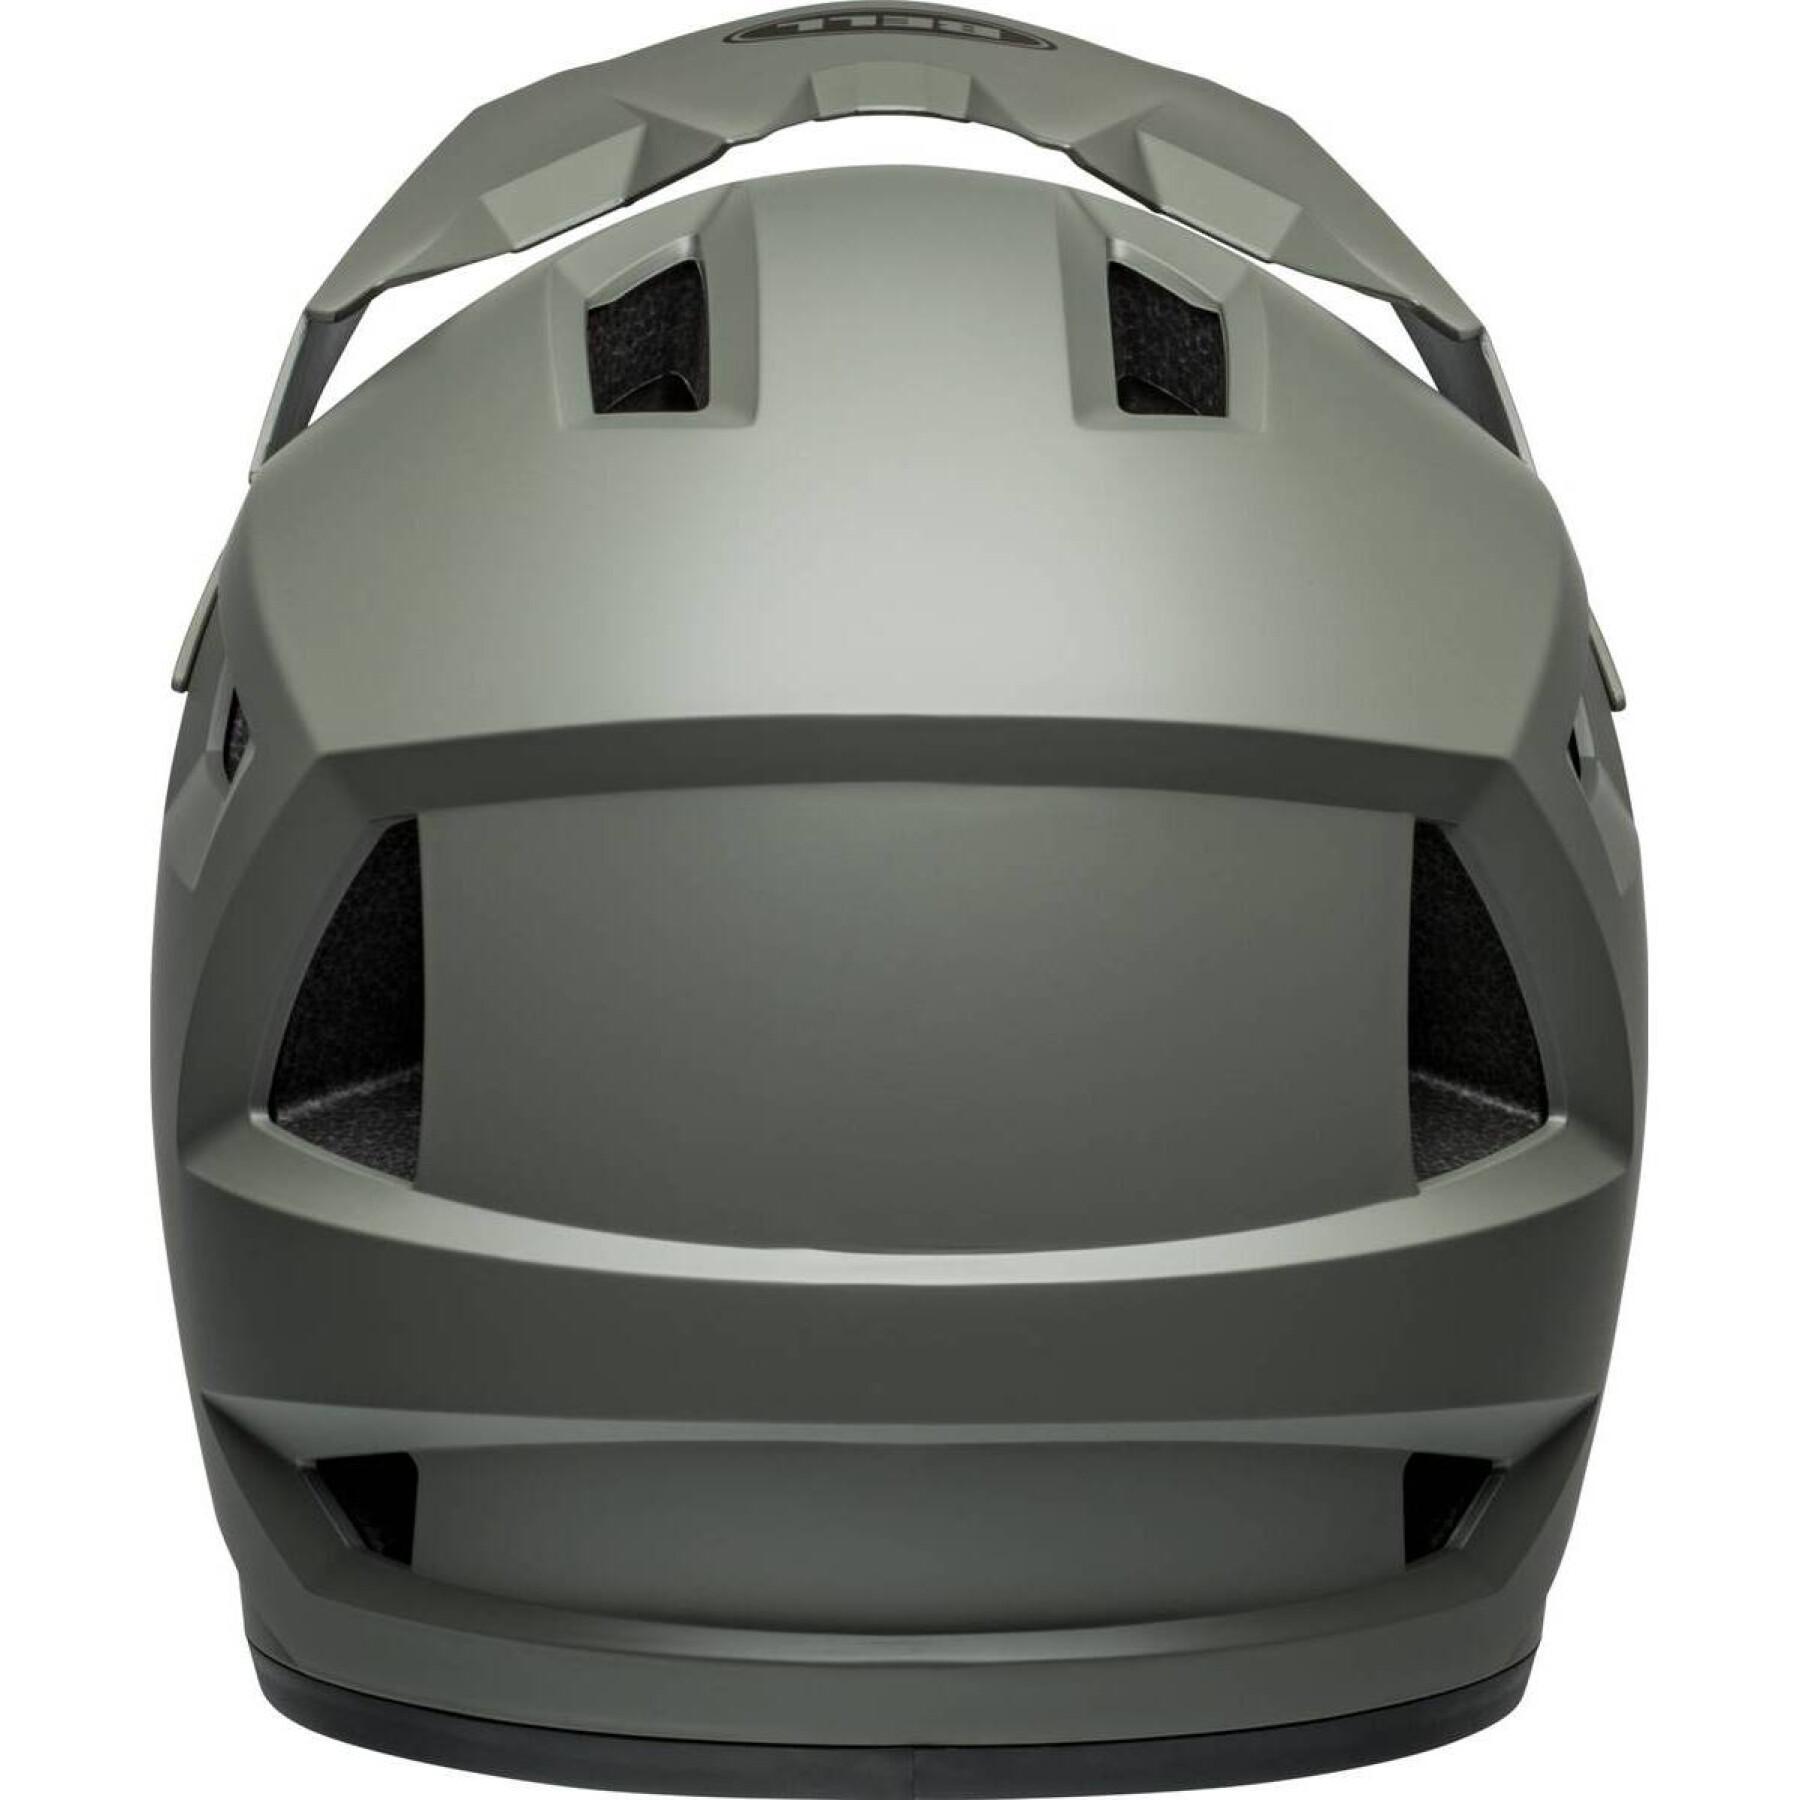  Bell Sanction 2 helmet